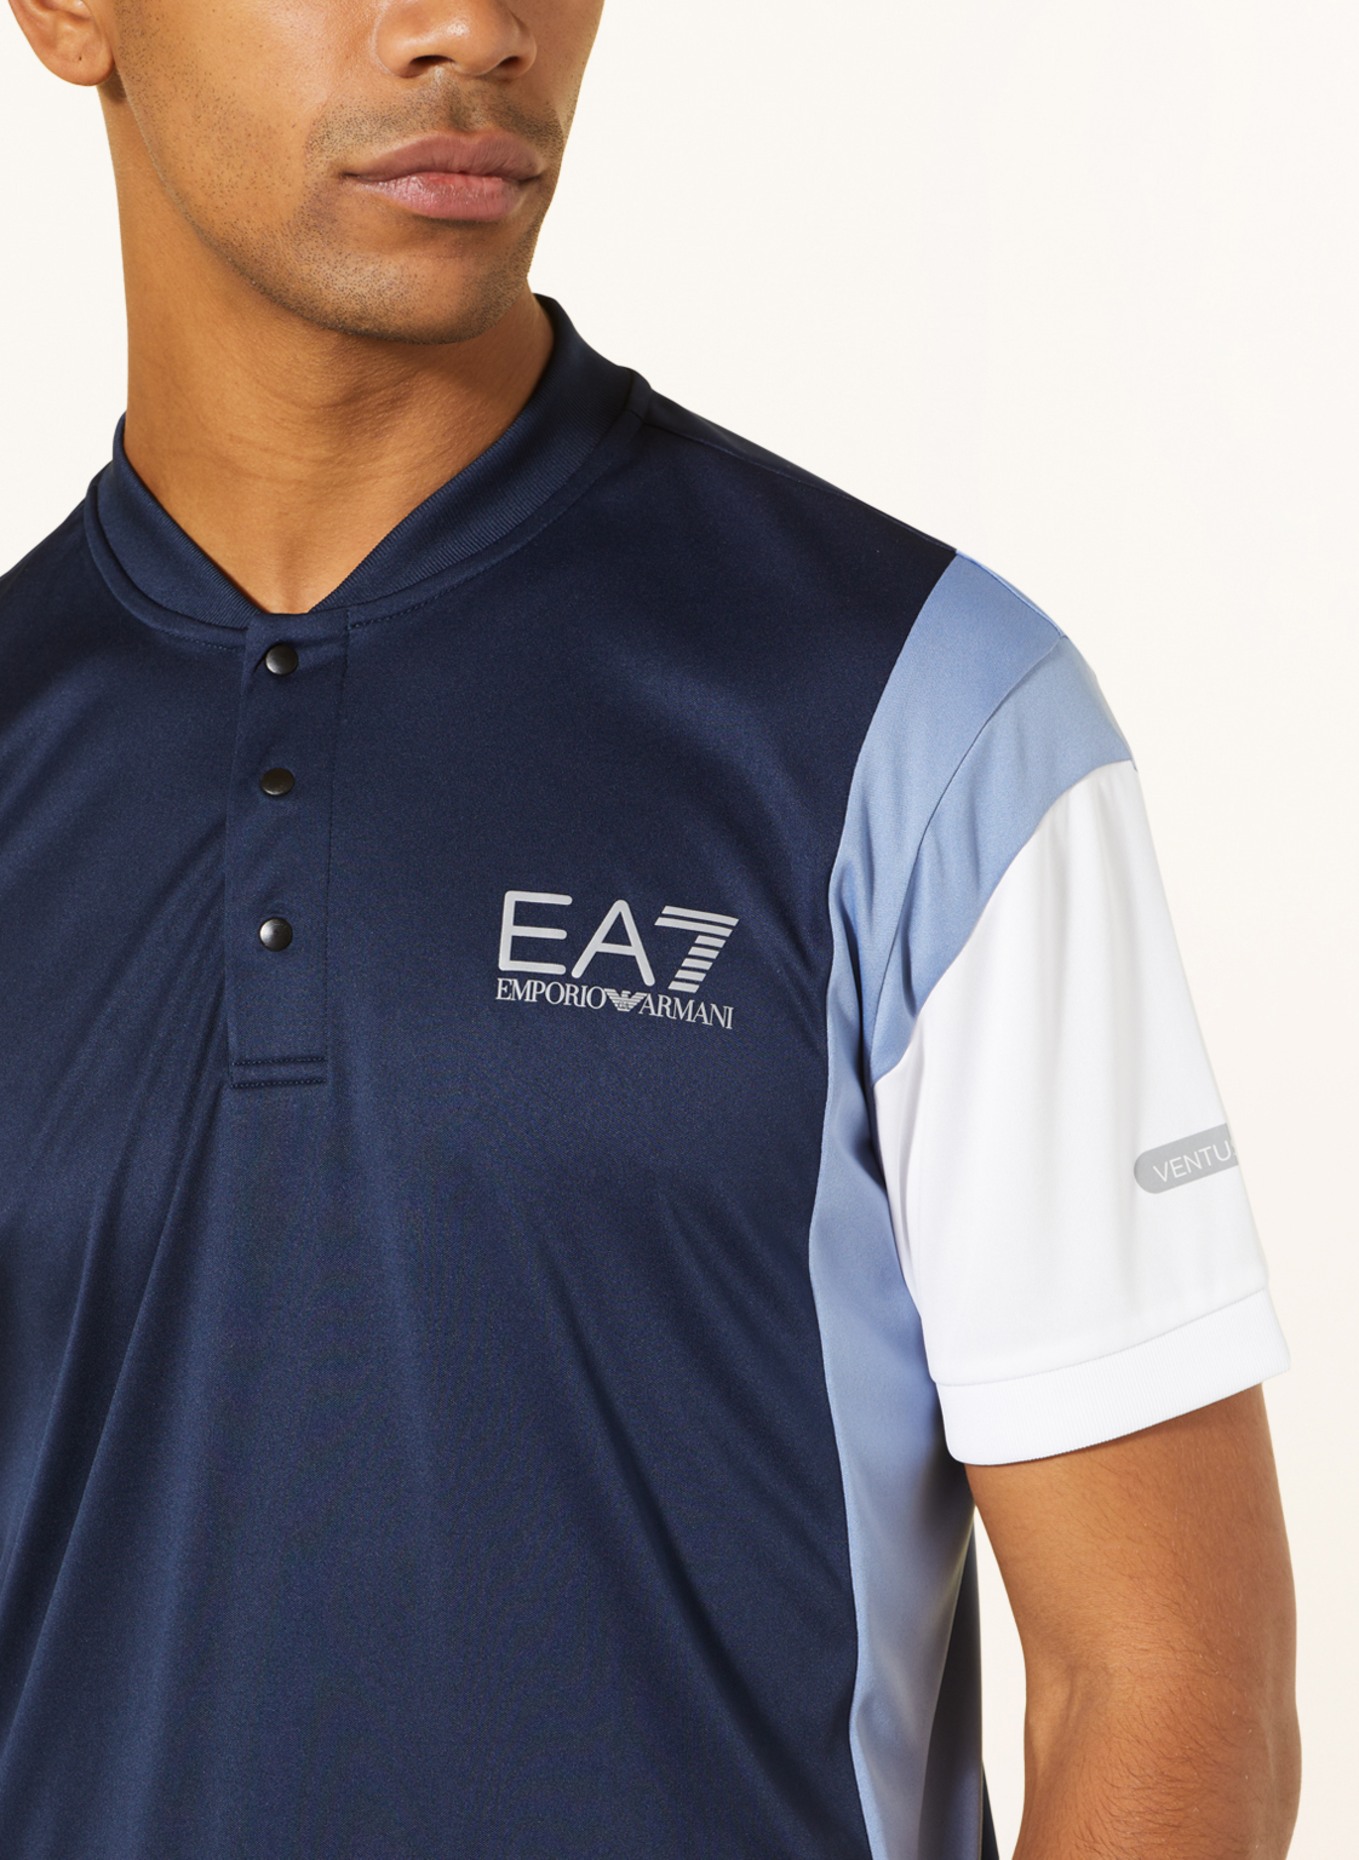 EA7 EMPORIO ARMANI Funktions-Poloshirt PJPCZ, Farbe: DUNKELBLAU/ HELLBLAU/ WEISS (Bild 4)